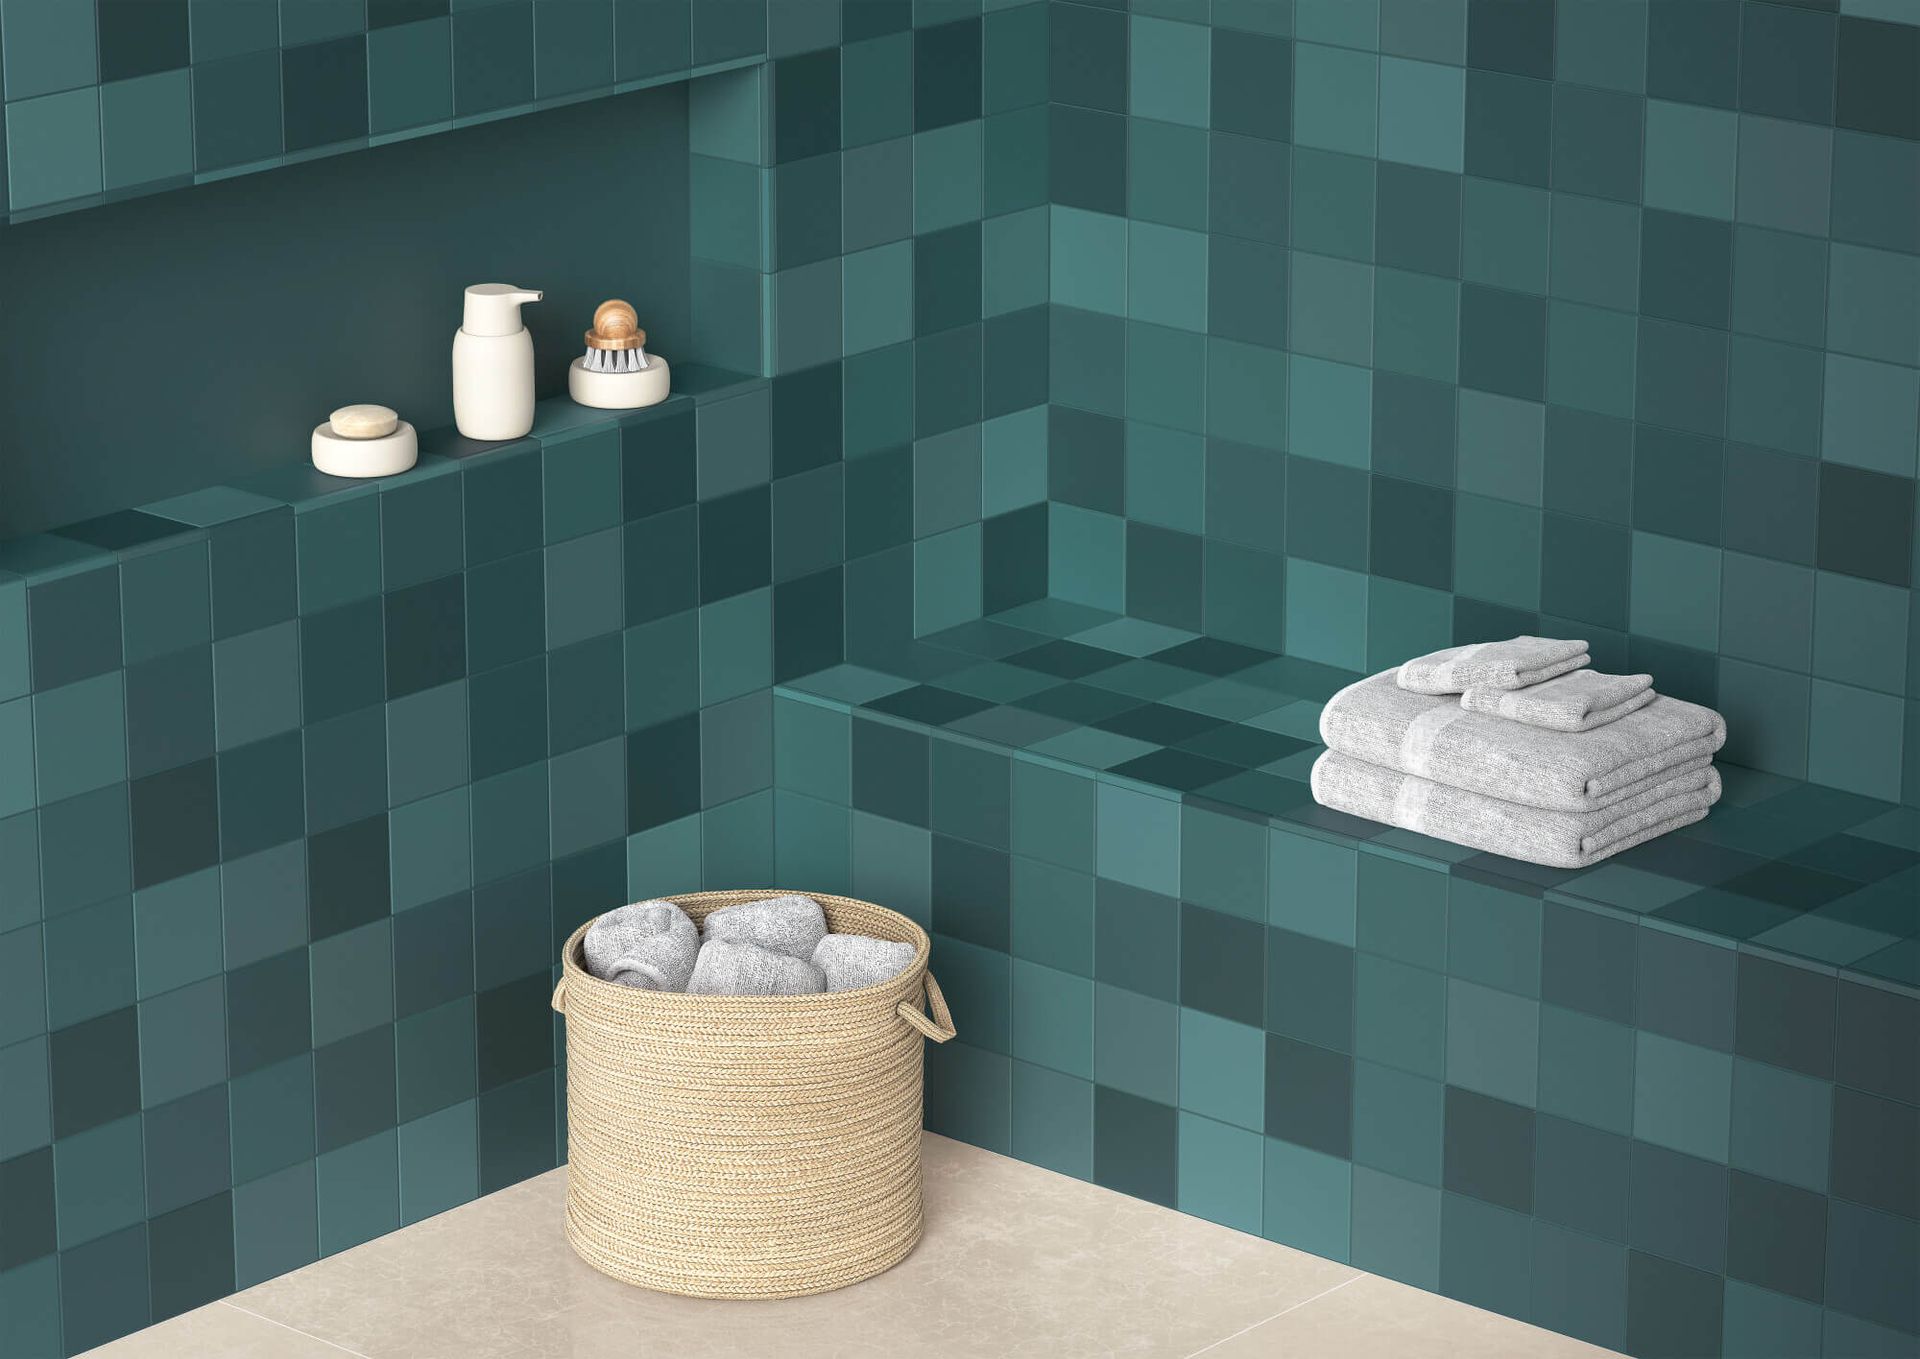 spa / bathroom tile design